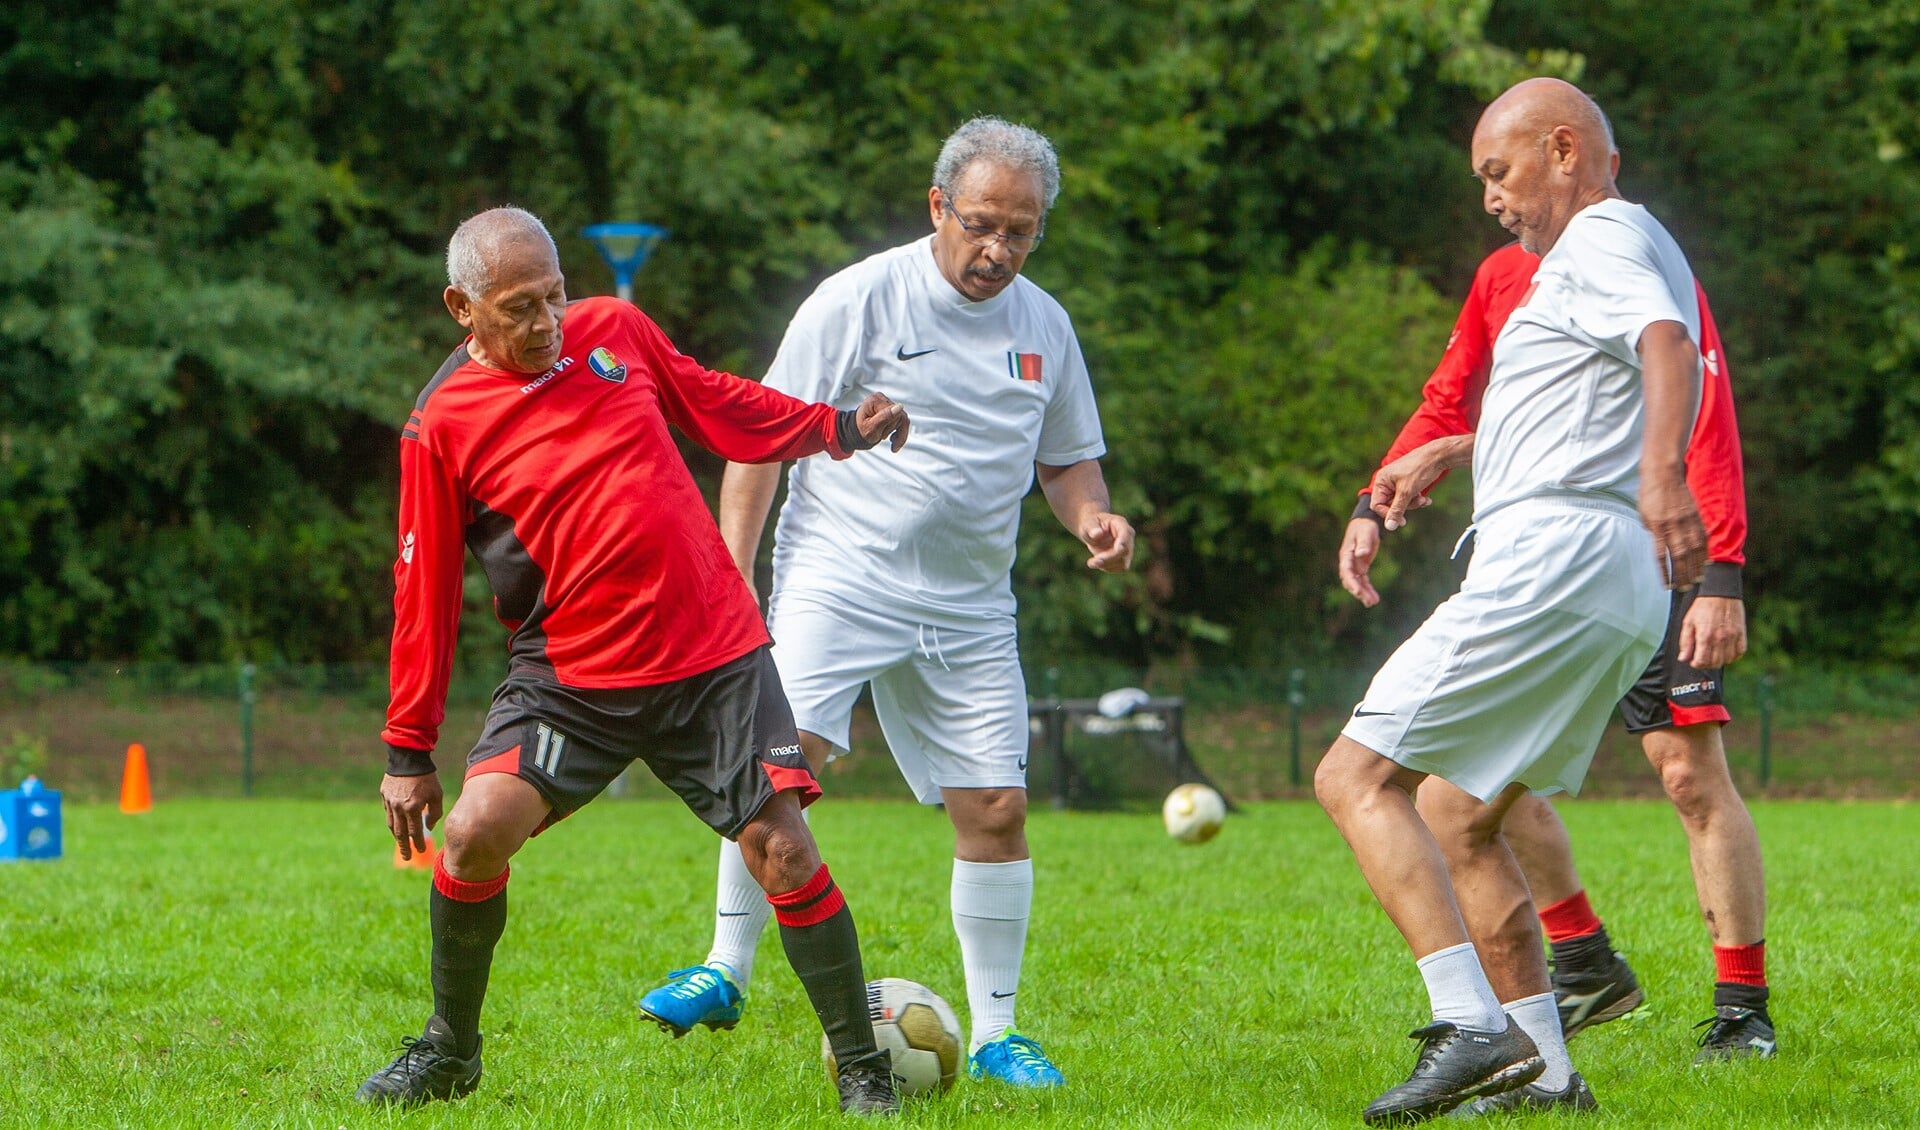 Felle strijd om de bal bij het Walking Football tussen AH Old Stars en Maluku Old Stars.